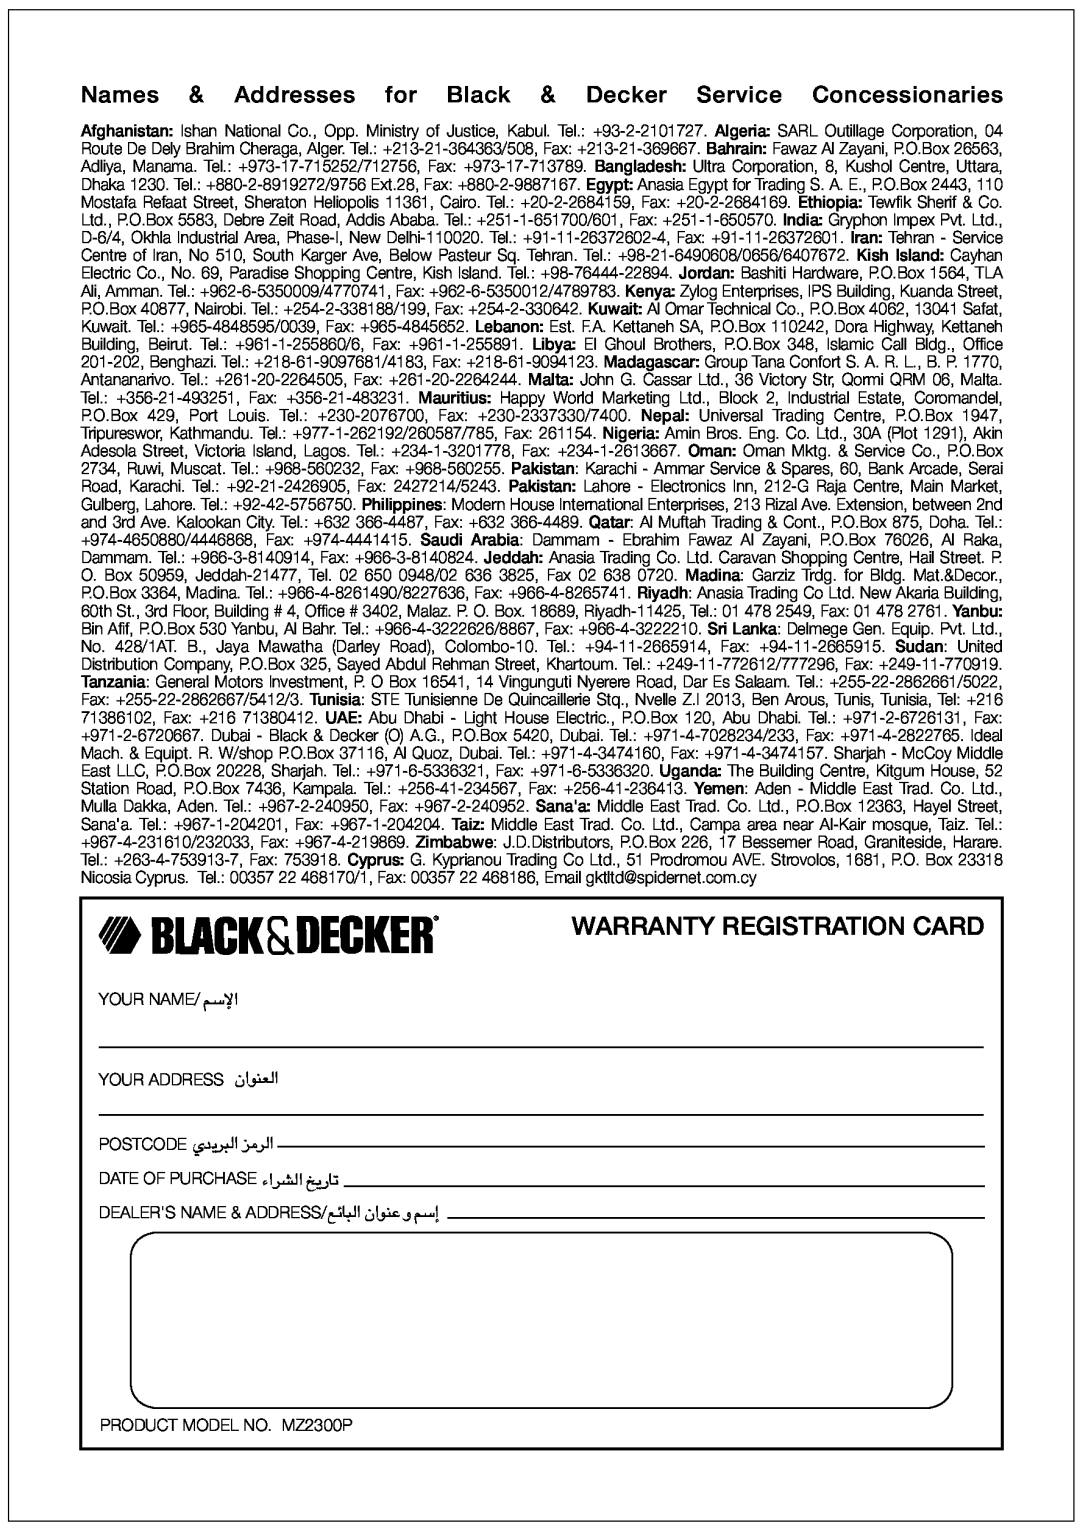 Black & Decker MZ2300P manual Warranty Registration Card, Names & Addresses for Black & Decker Service Concessionaries 